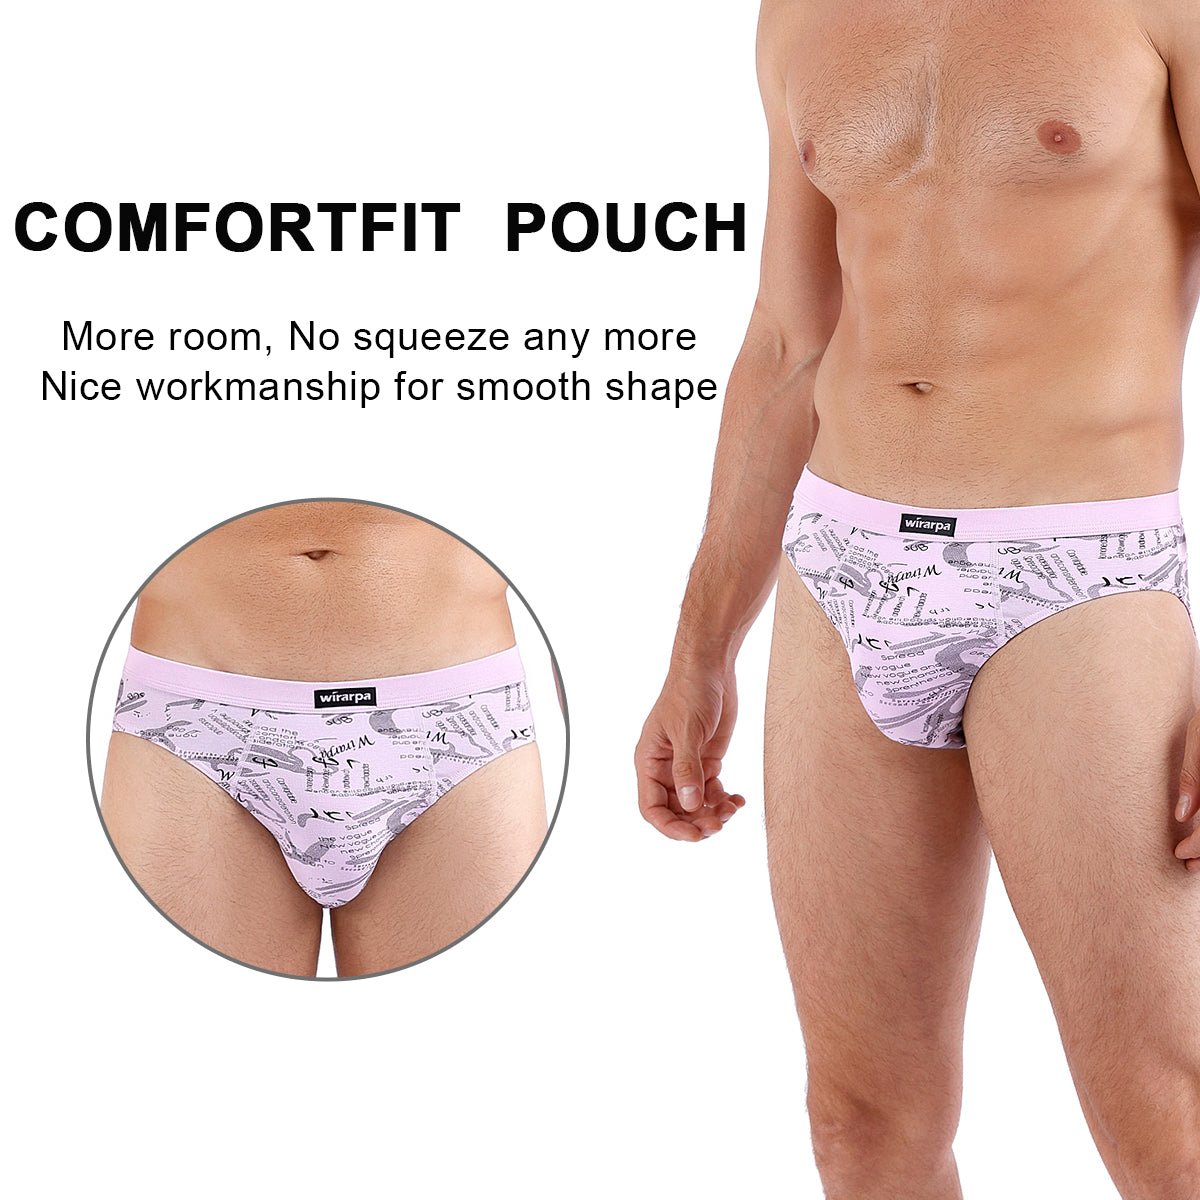 wirarpa Men's Underwear Modal Microfiber Briefs No Fly Covered Waistband 4  Pack Sizes S-3XL